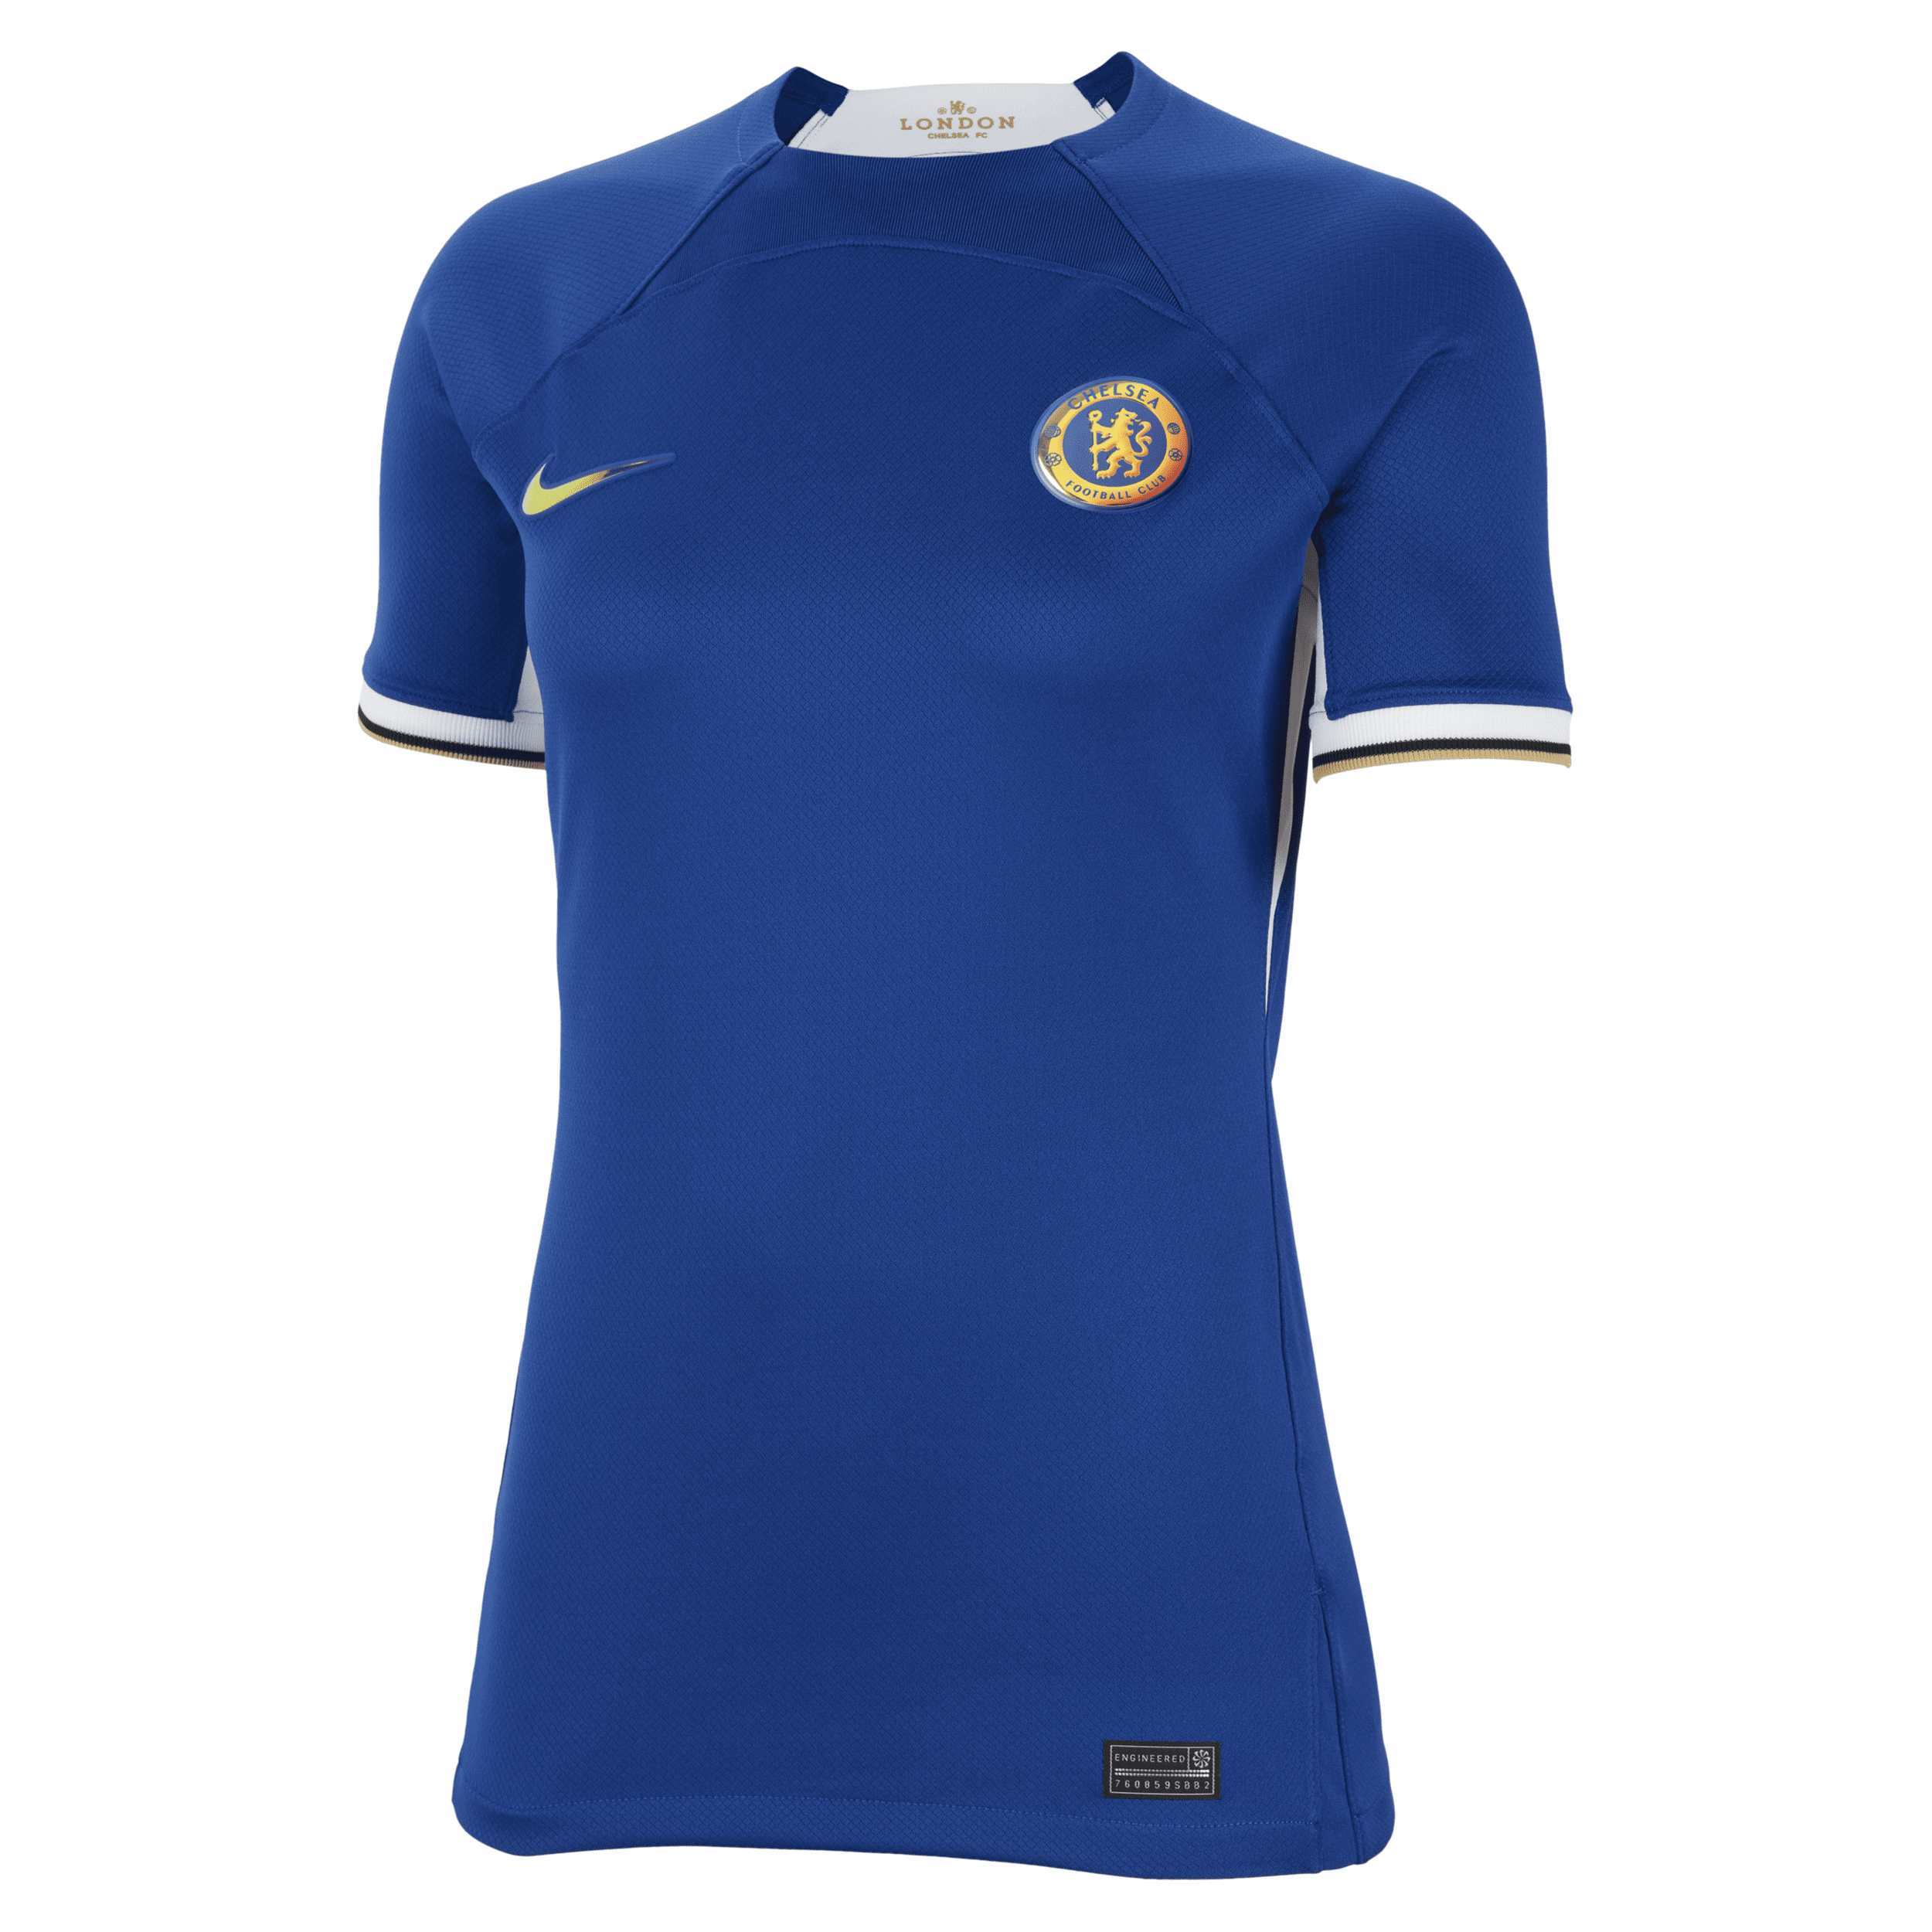 Nike Moisã©s Caicedo Chelsea 2023/24 Stadium Home  Women's Dri-fit Soccer Jersey In Blue